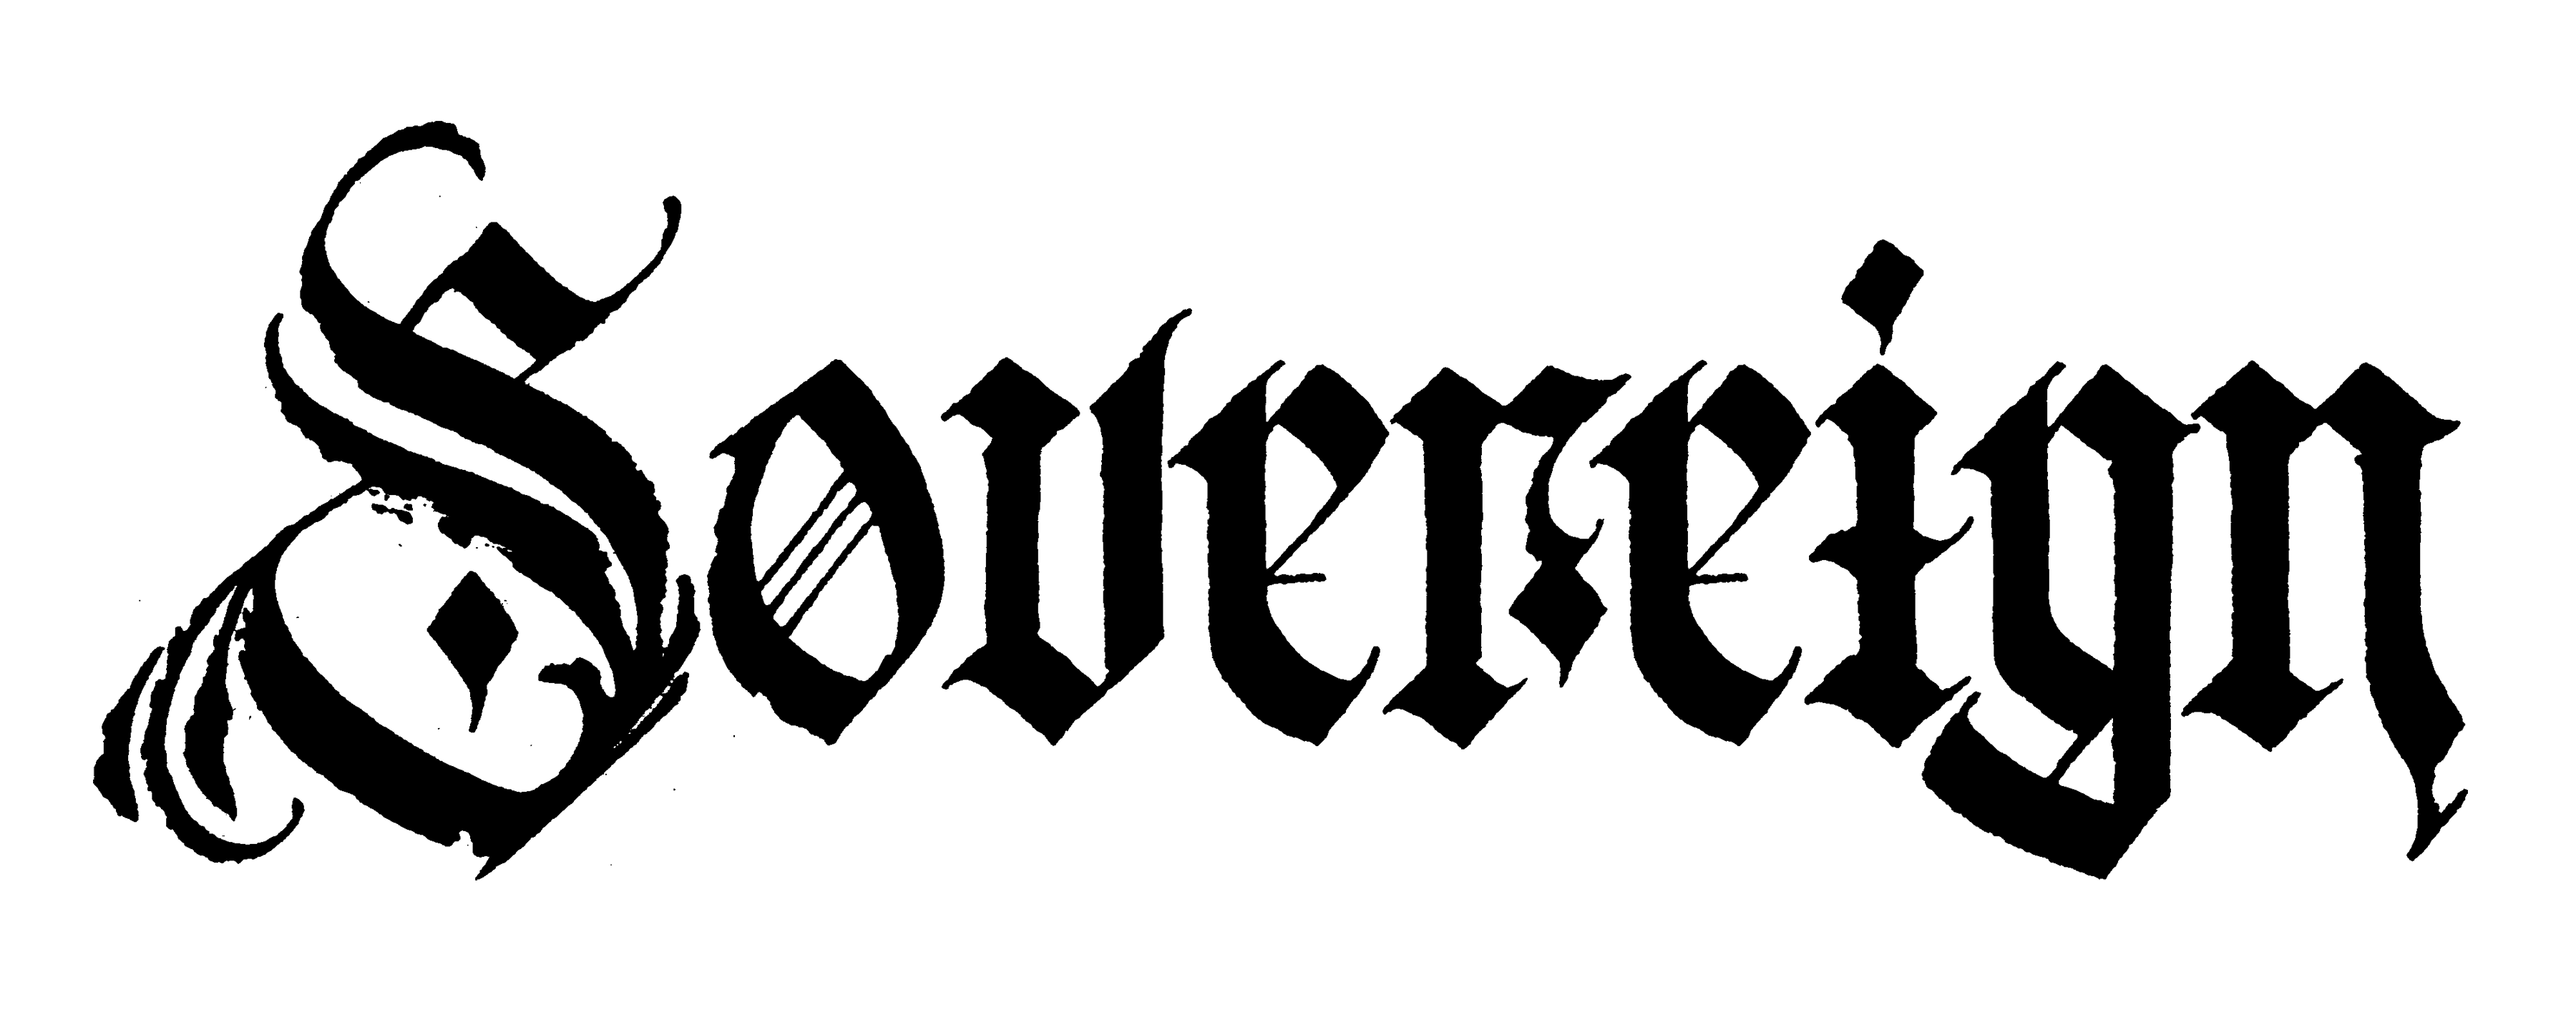 Sovereign logo scroll